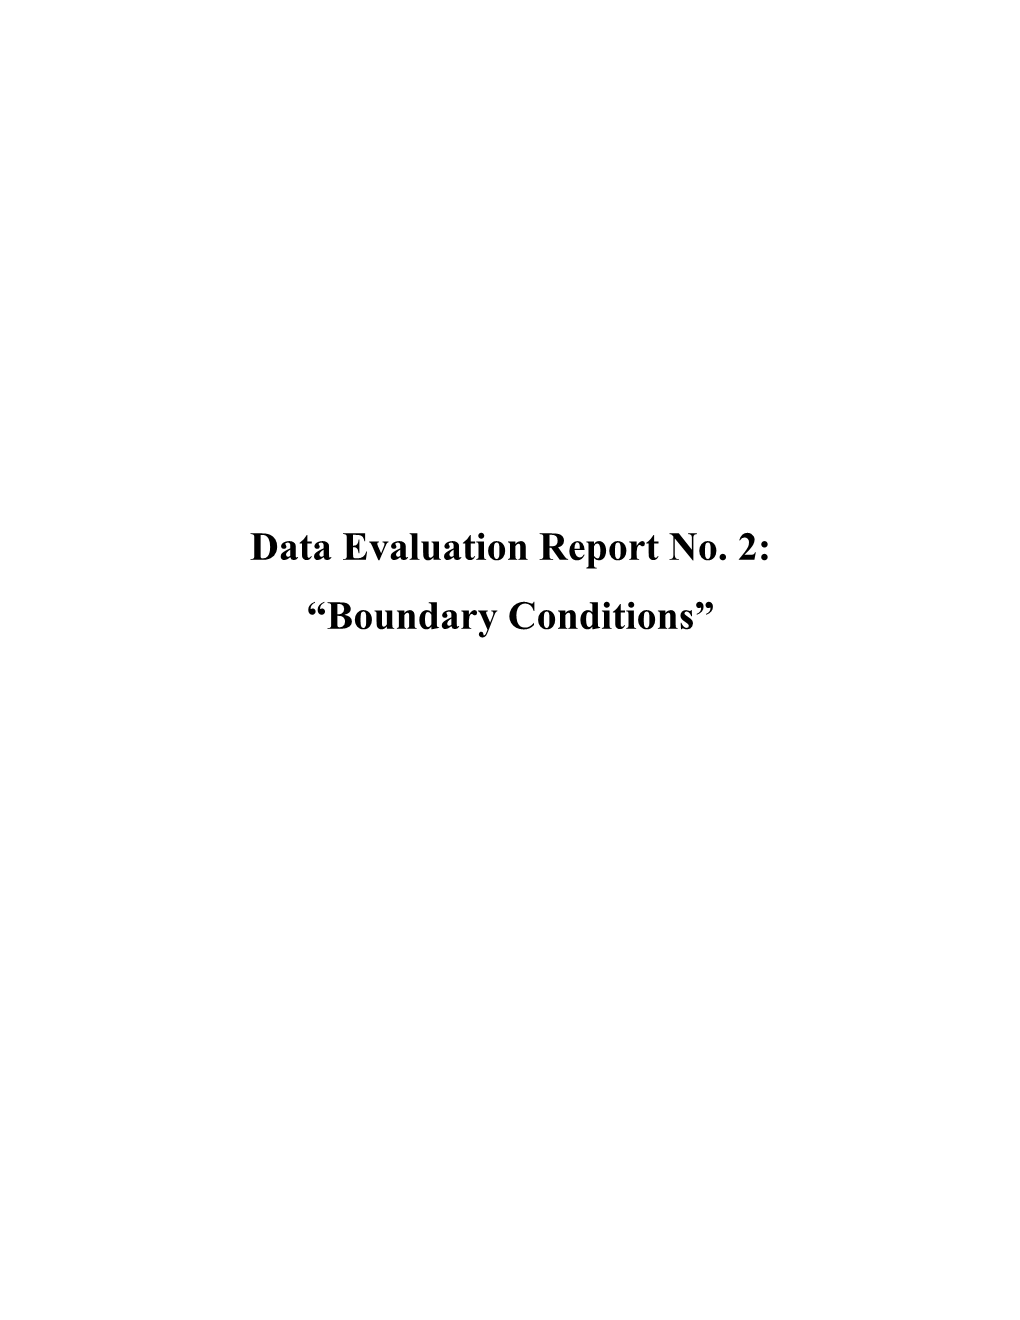 Data Evaluation Report No. 2: “Boundary Conditions”